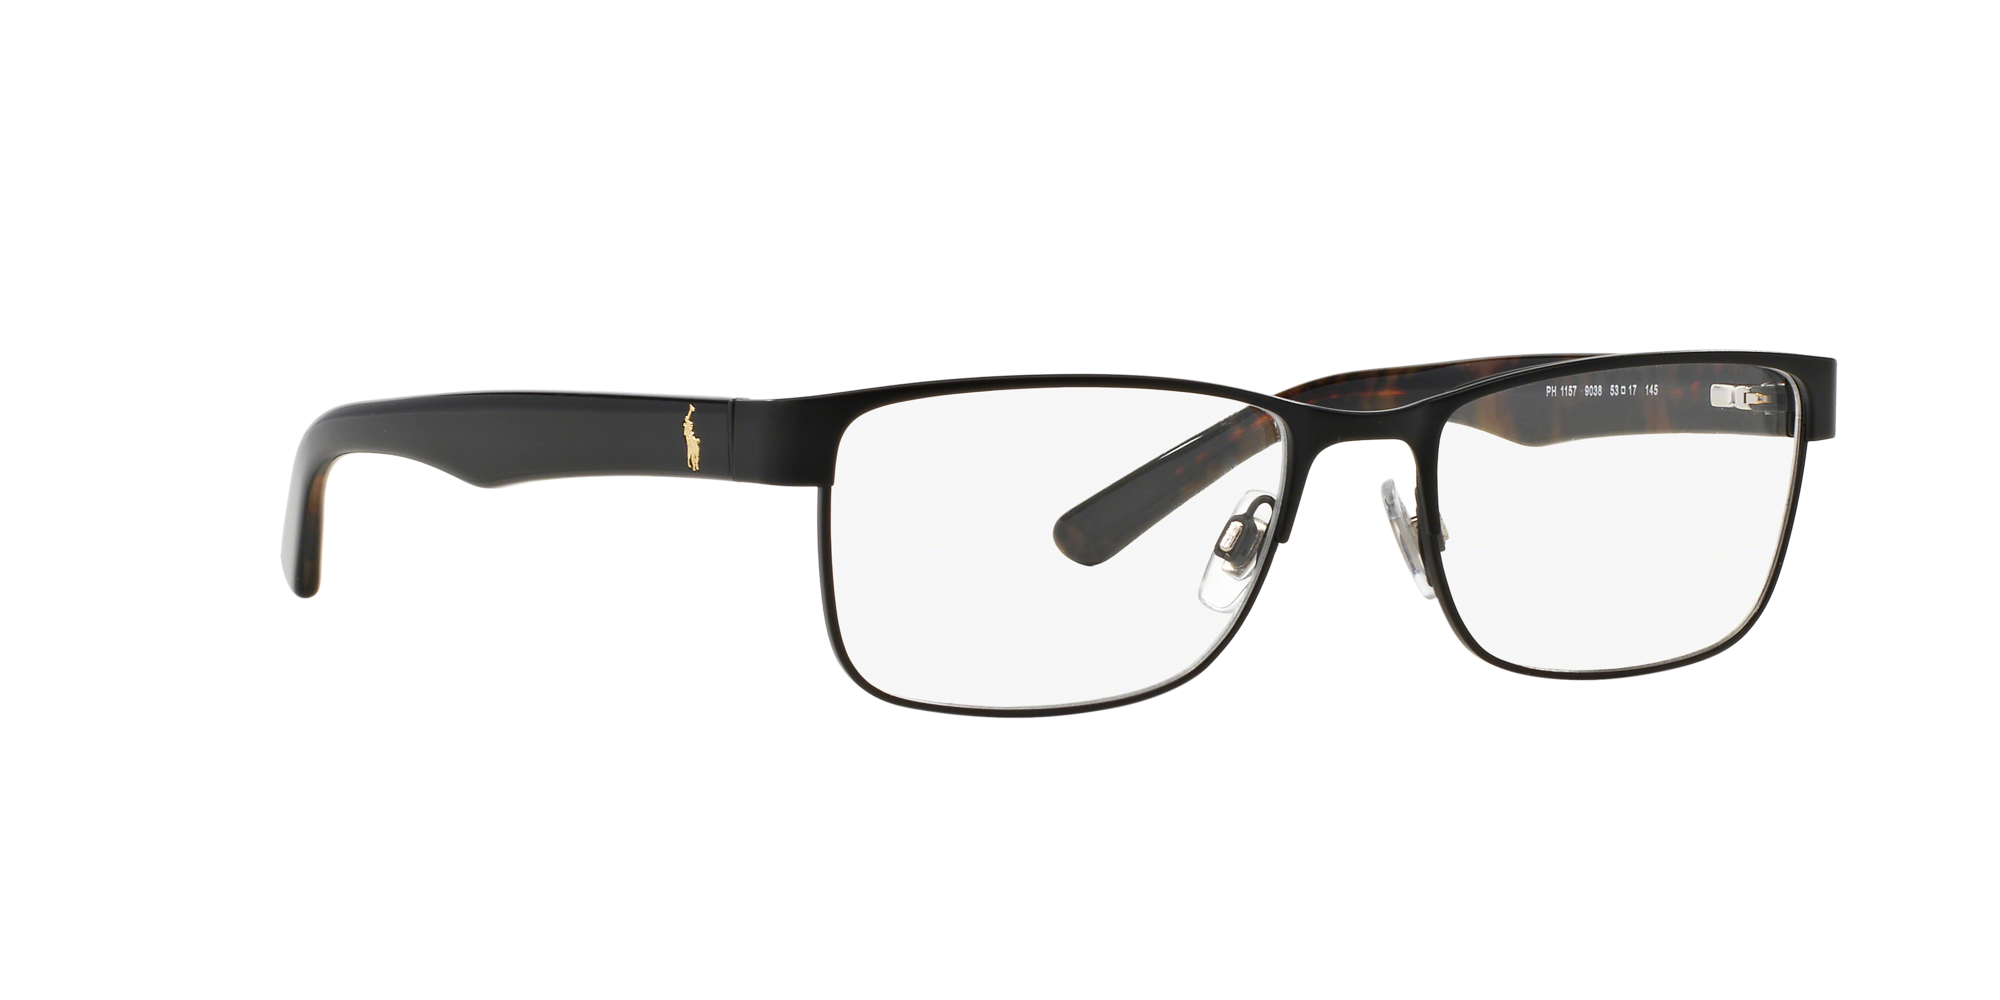 Angle_Right01 Polo Ralph Lauren PH 1157 Glasses Transparent / Black